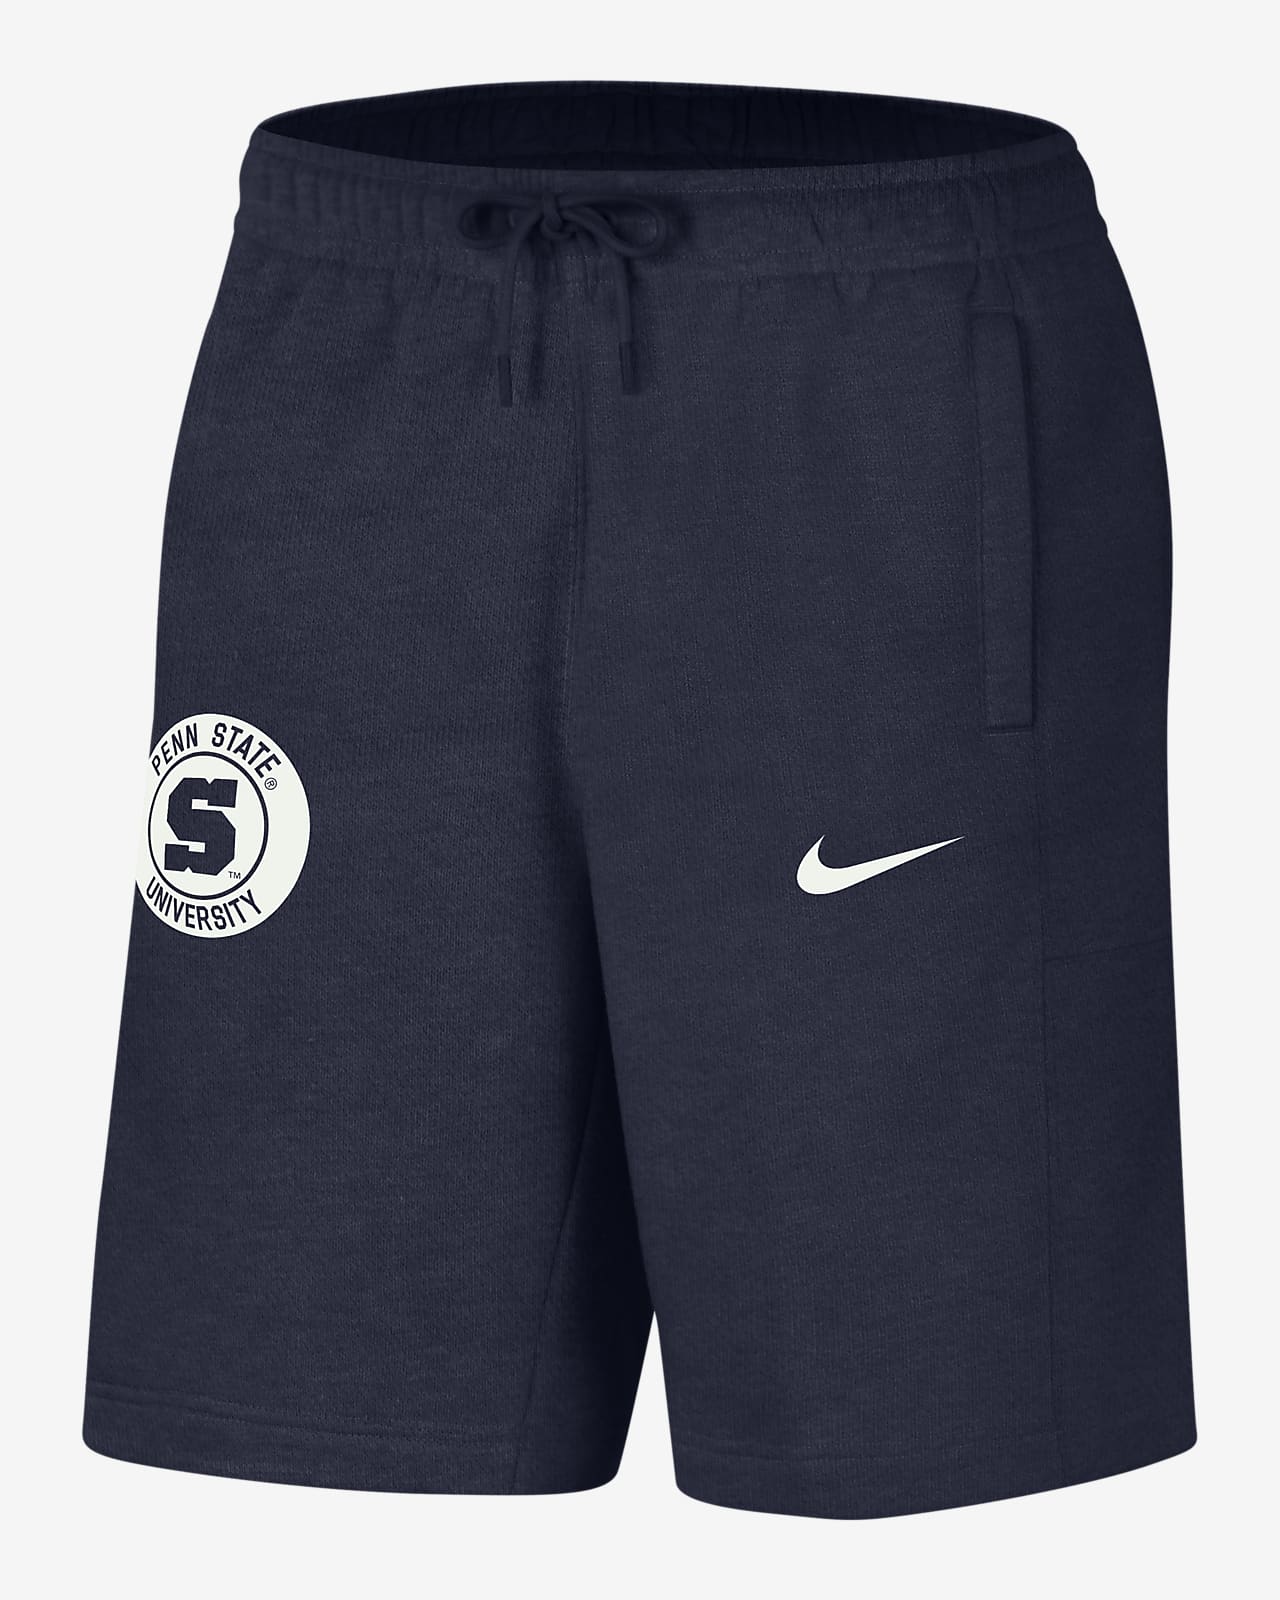 Penn State Men's Nike College Shorts